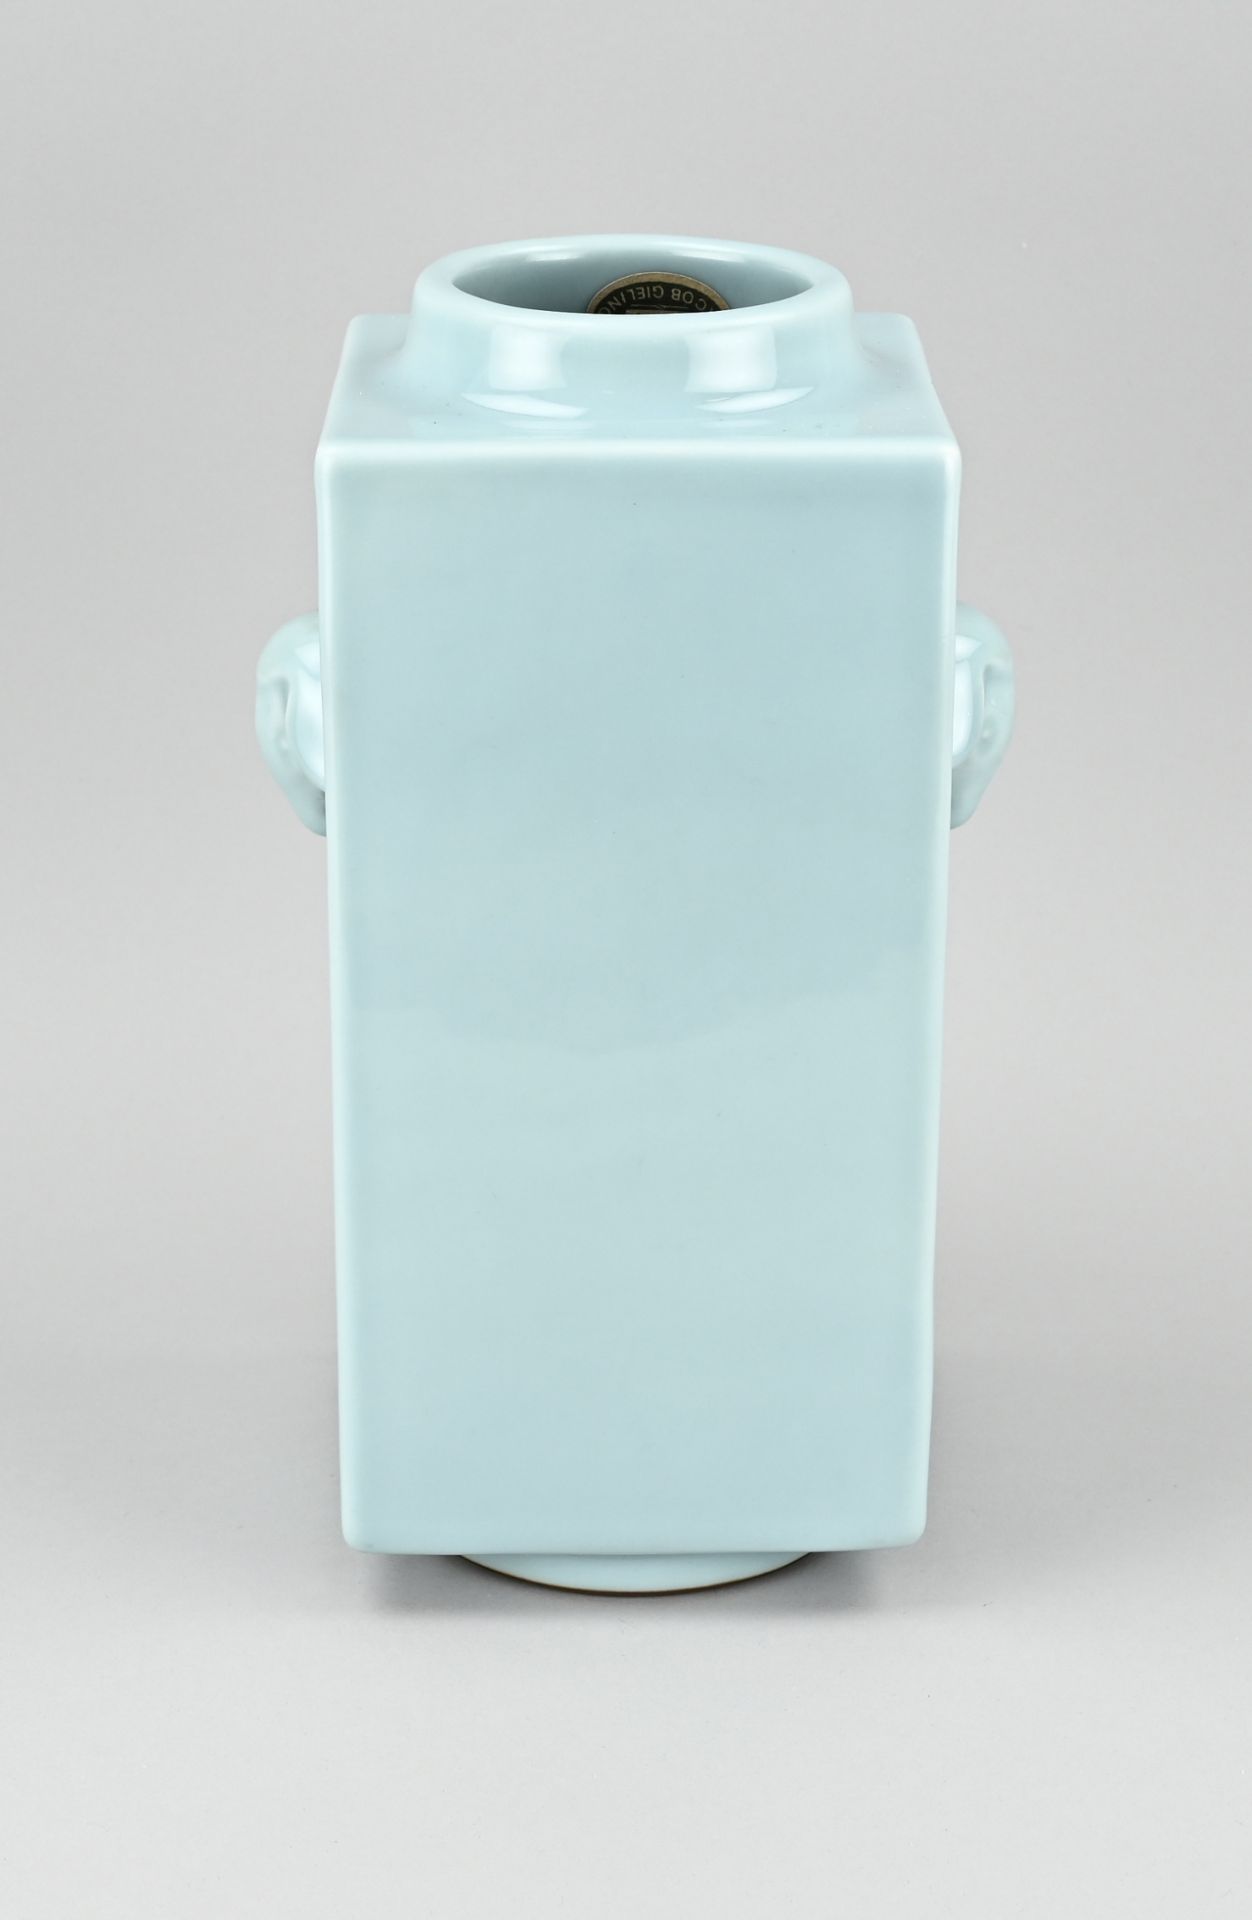 Square celadon vase - Image 2 of 3